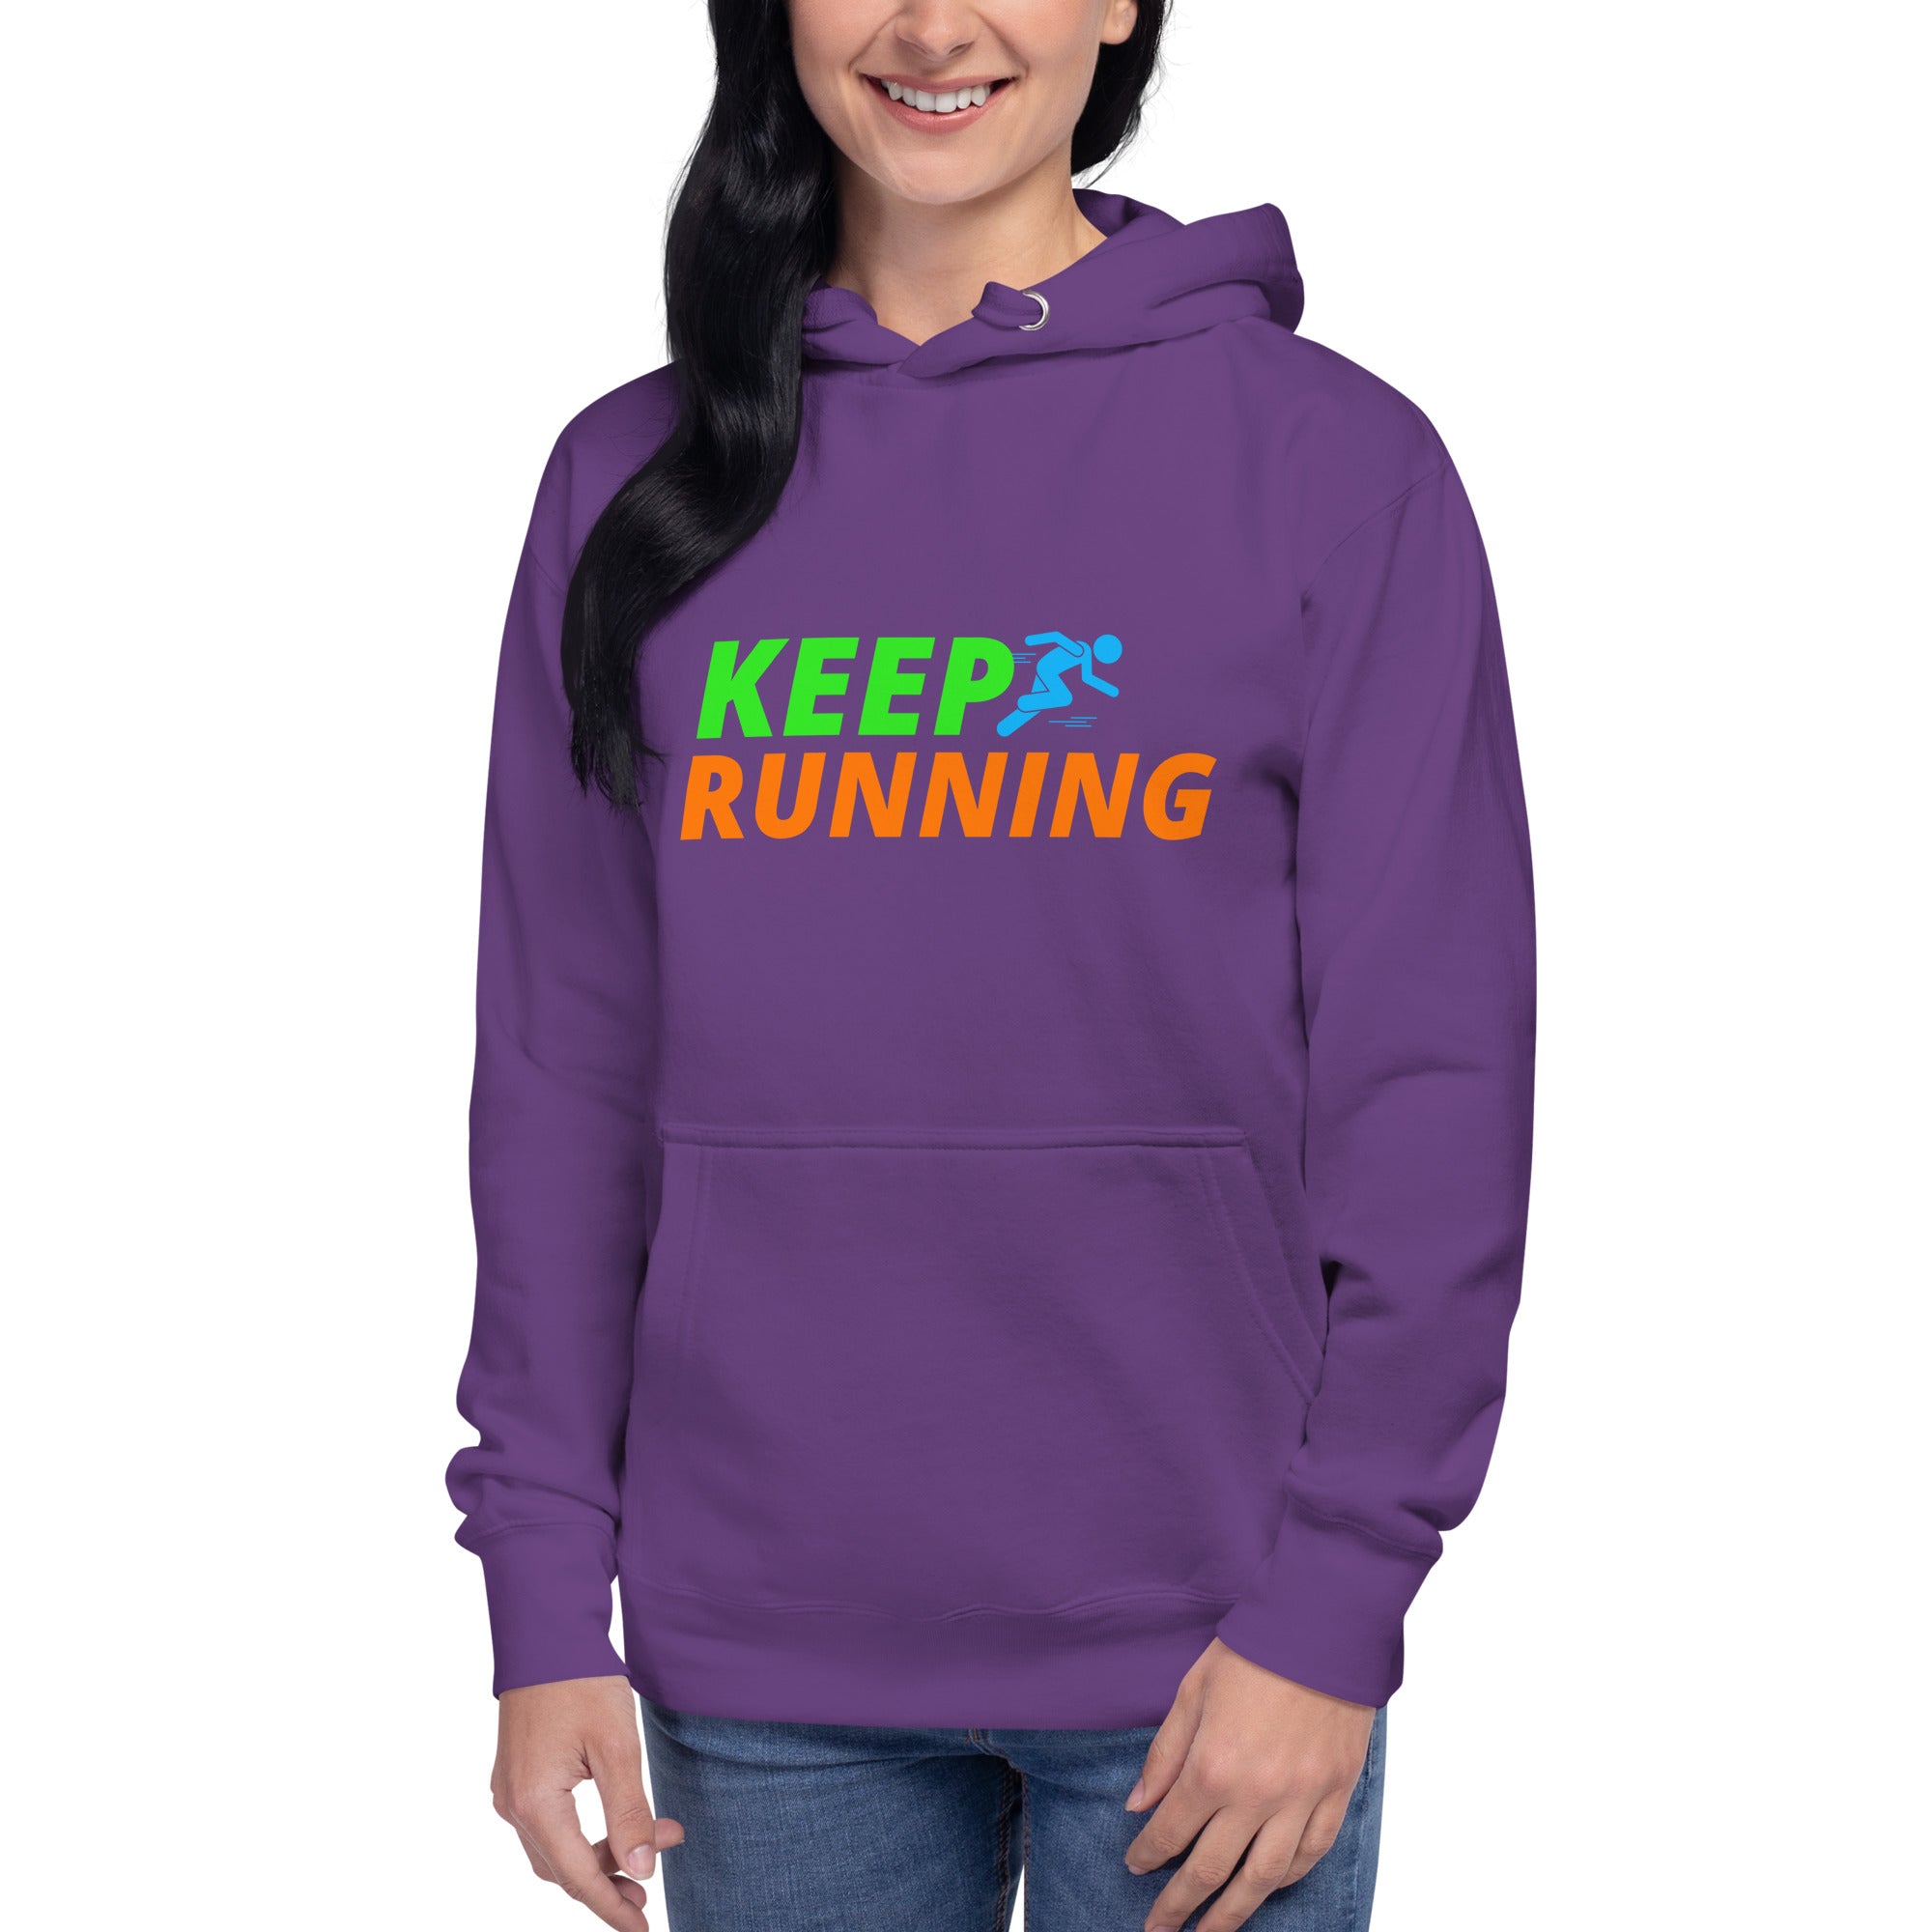 Keep Running Women's Heavy Hoodie